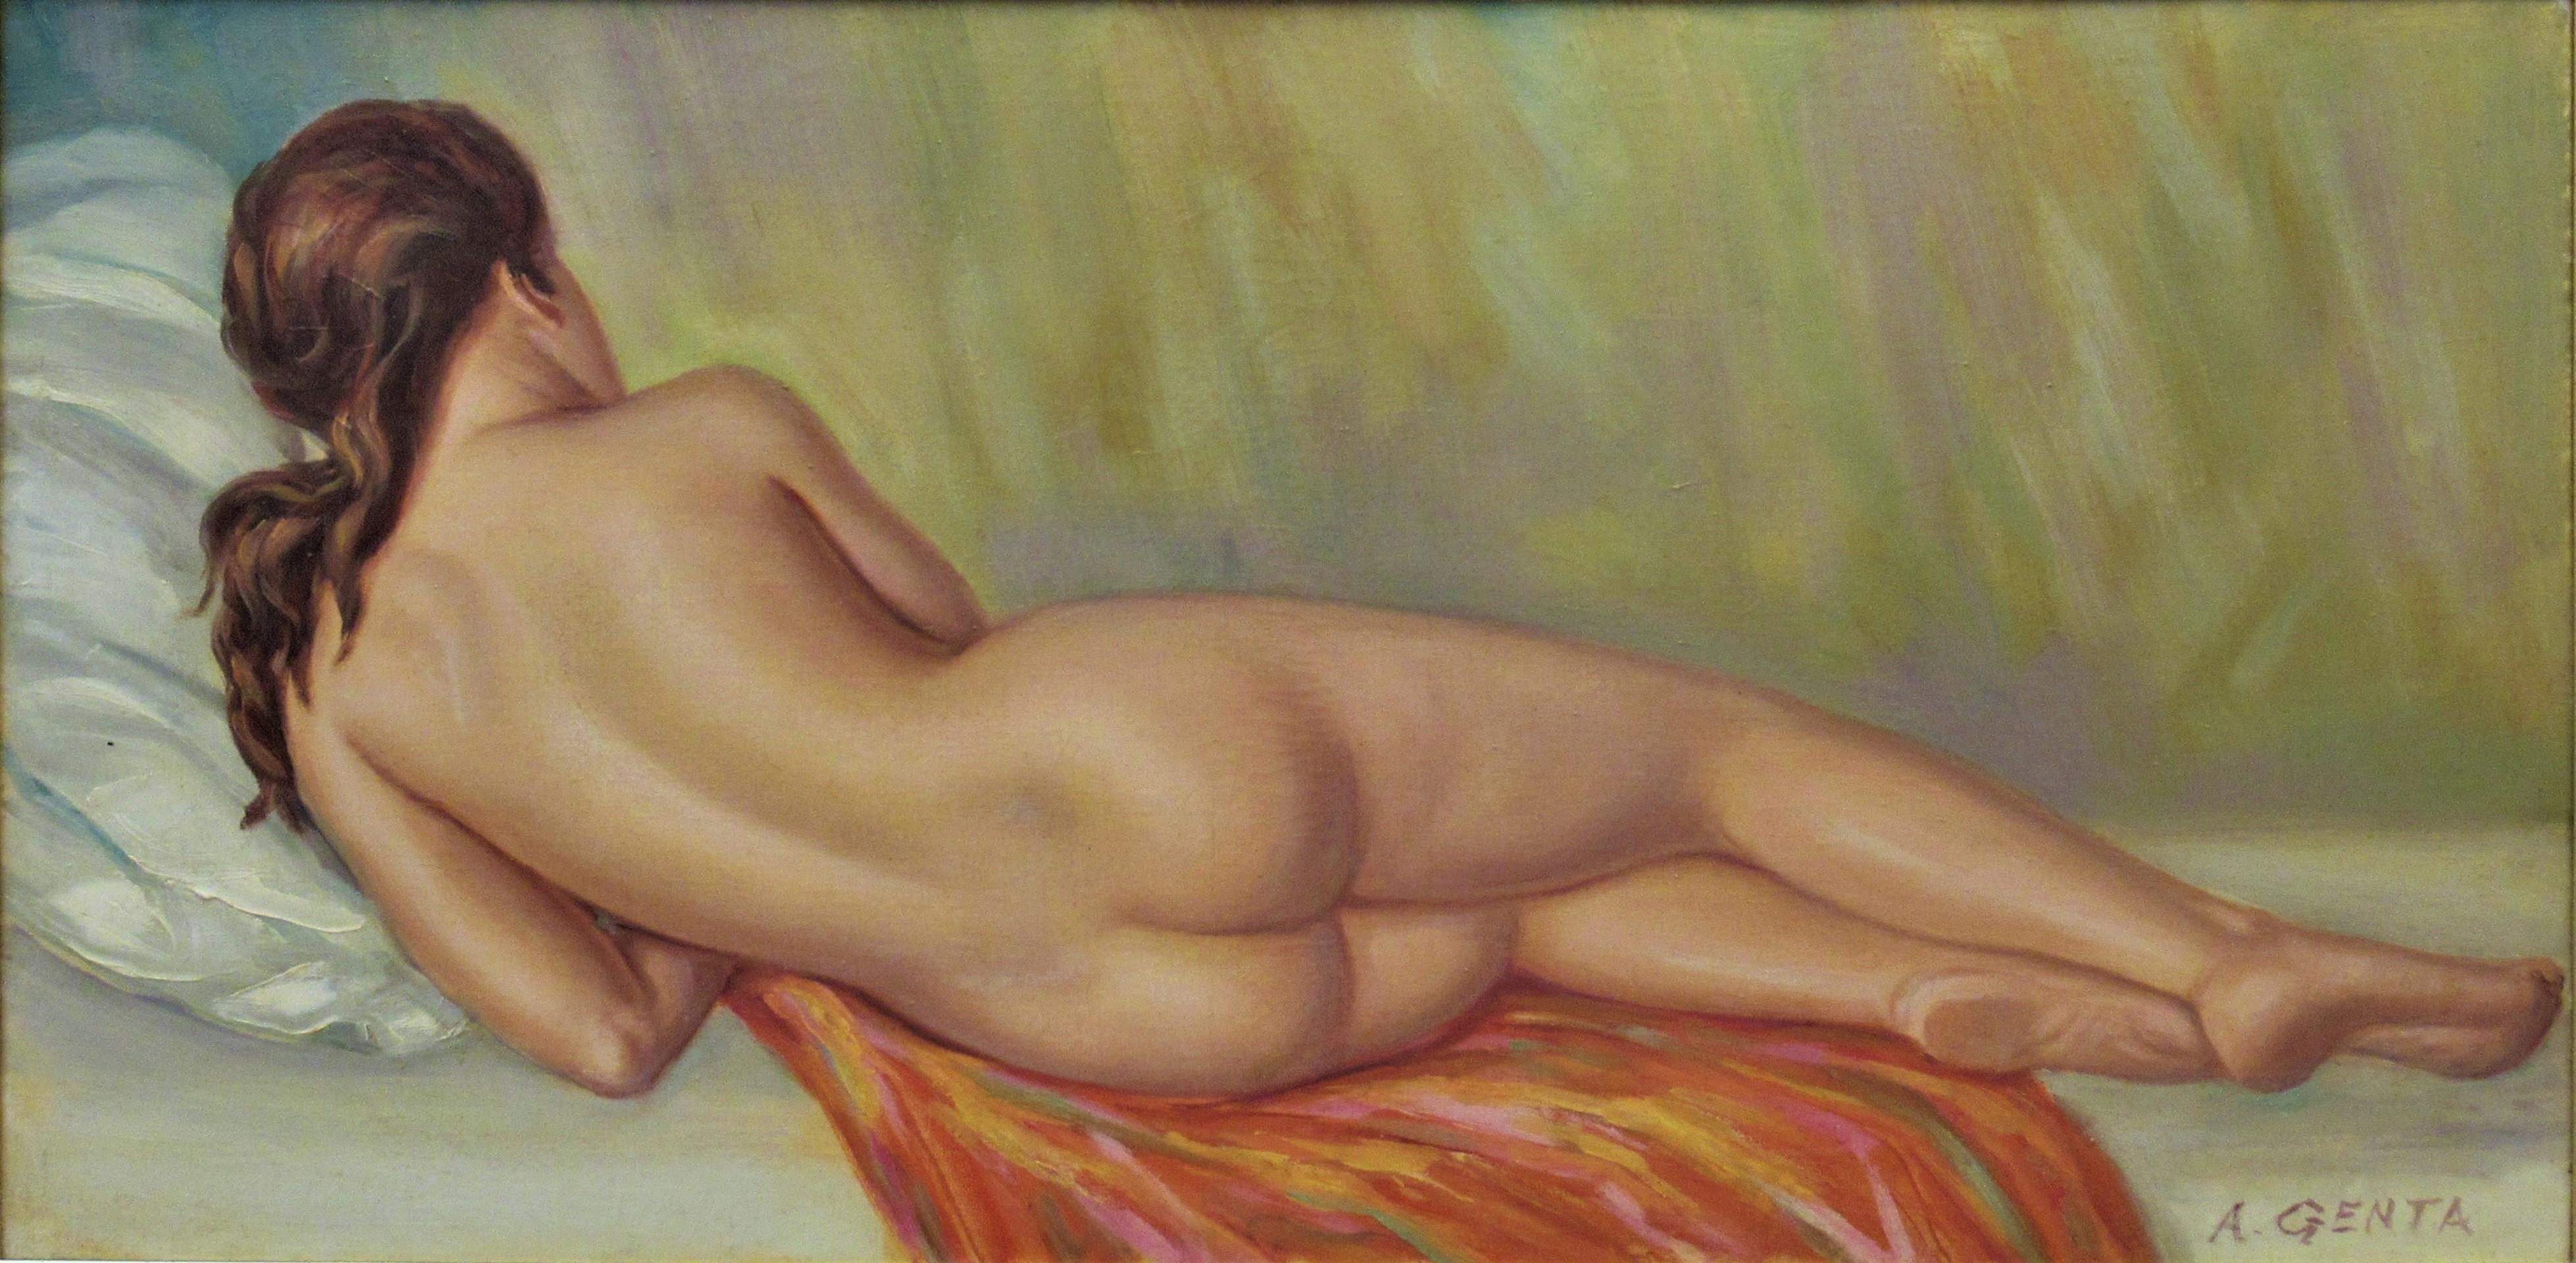 Hautfarbener Nackt – Painting von Albert Genta